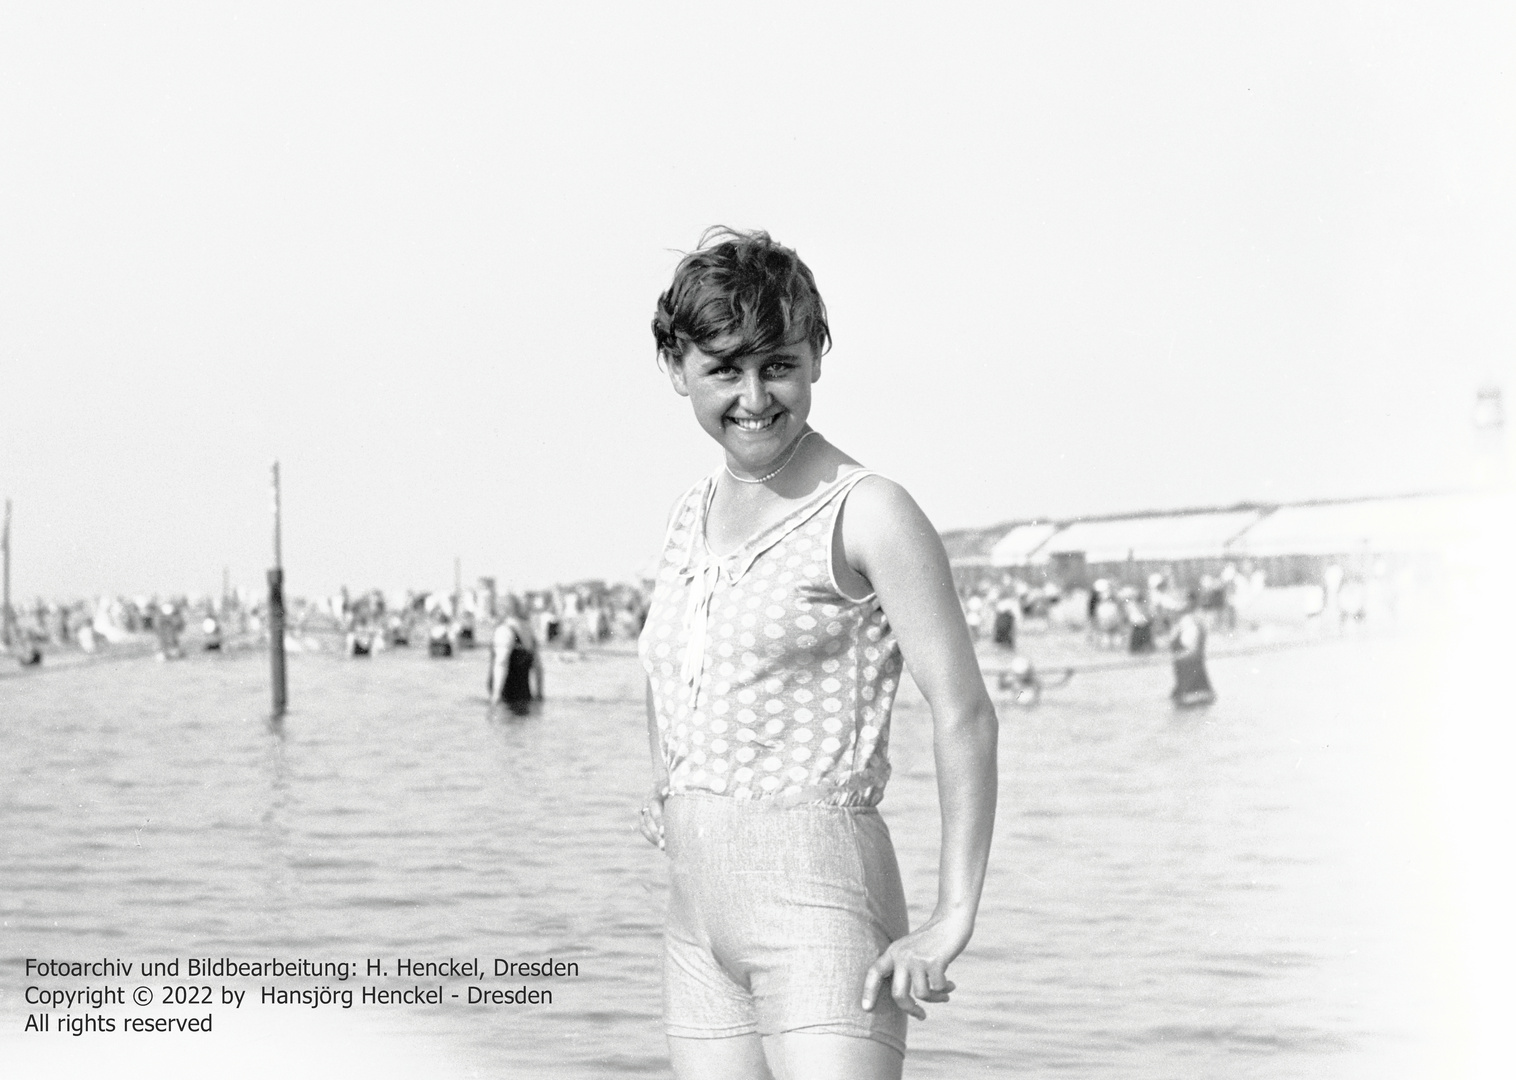 Girl in swimwear 1930s Germany Photo Archive (c) 2022 Hansjörg Henckel